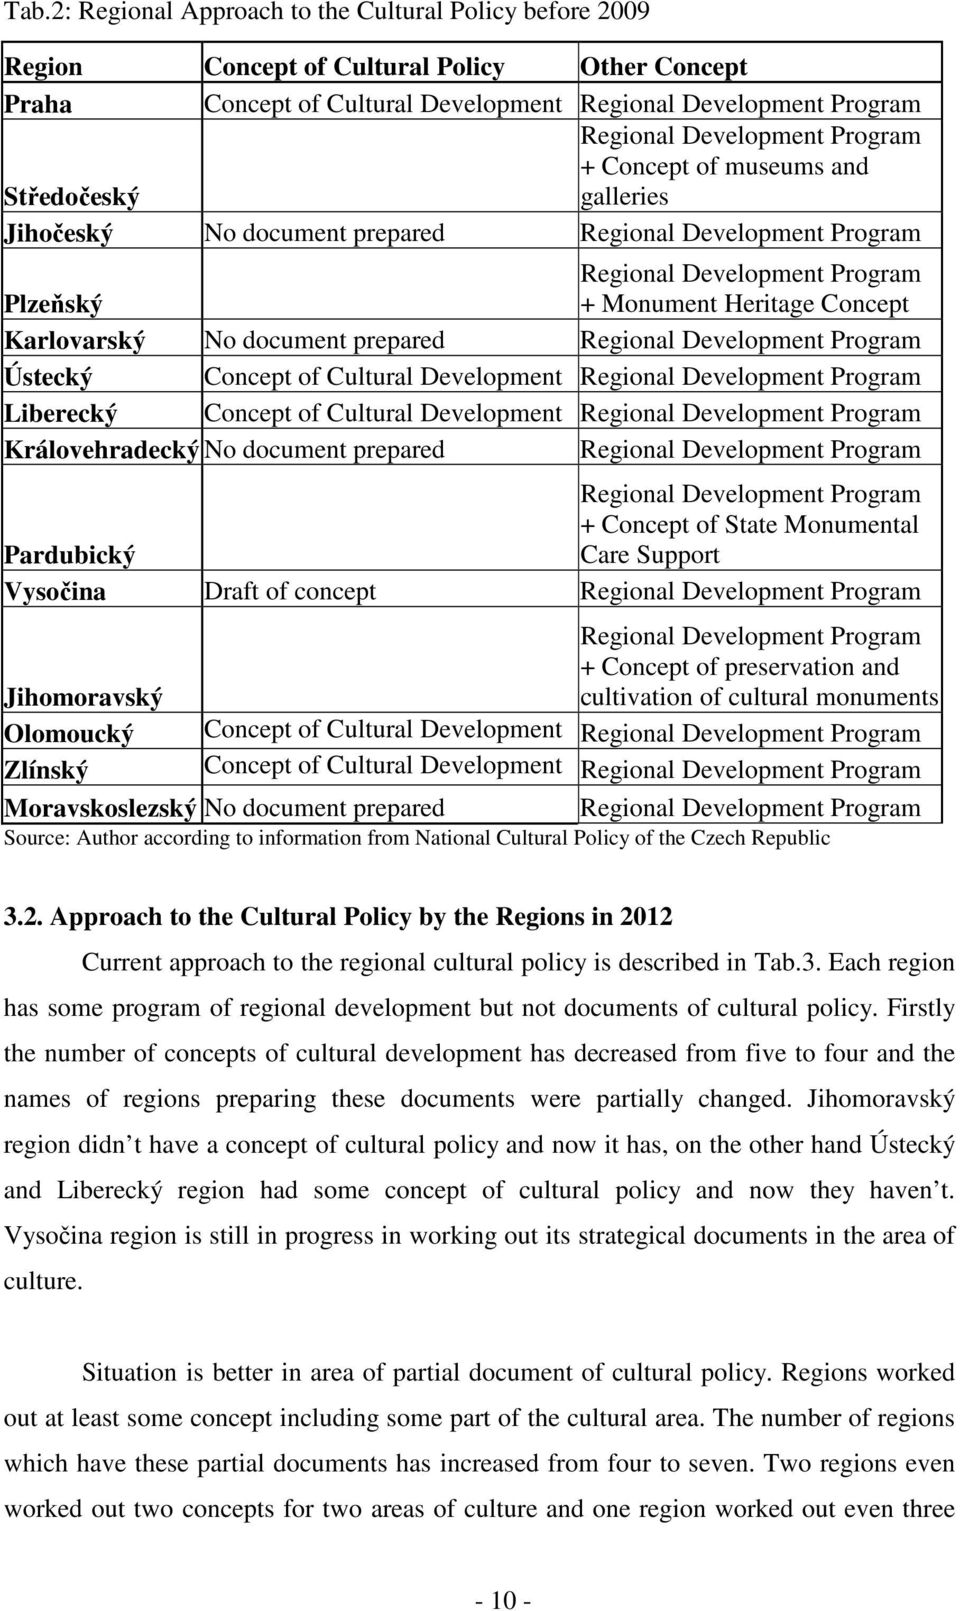 document prepared Regional Development Program Ústecký Concept of Cultural Development Regional Development Program Liberecký Concept of Cultural Development Regional Development Program